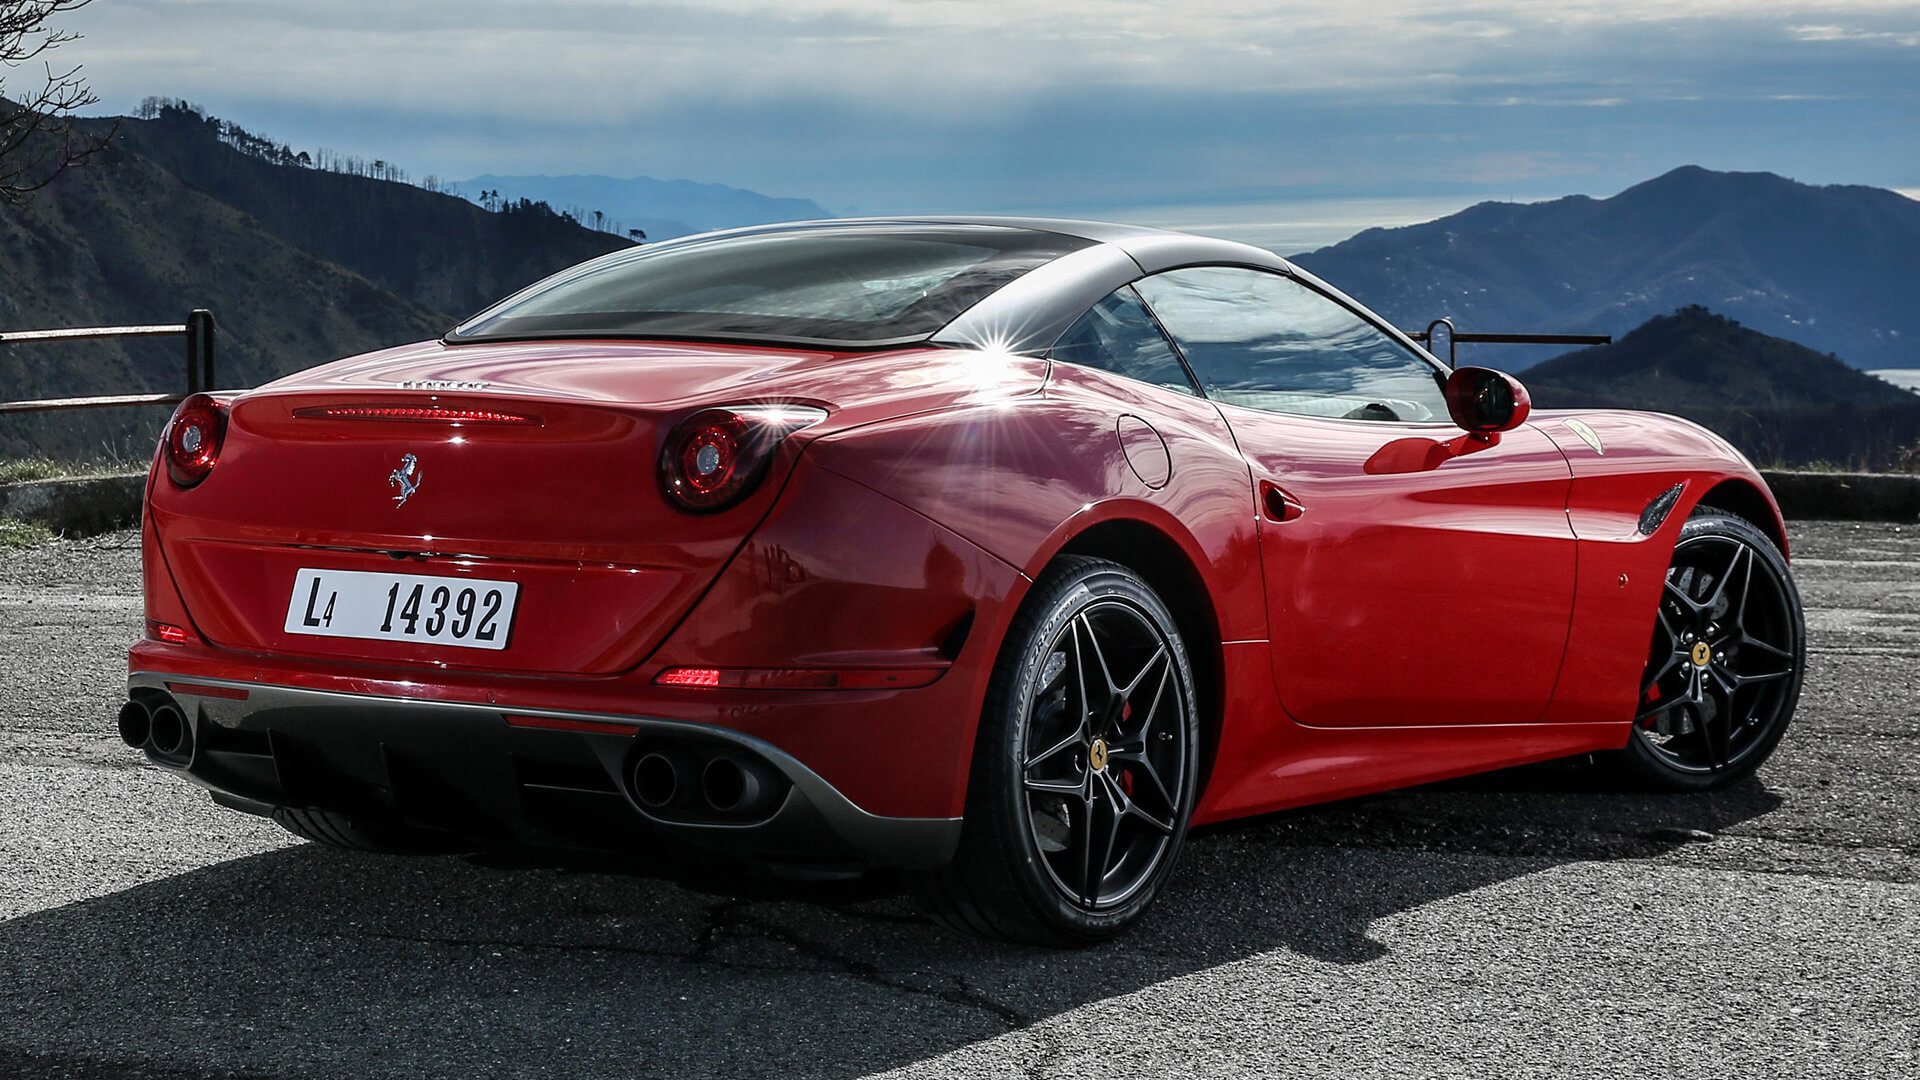 Ferrari California - характеристики, комплектации, фото, видео, обзор